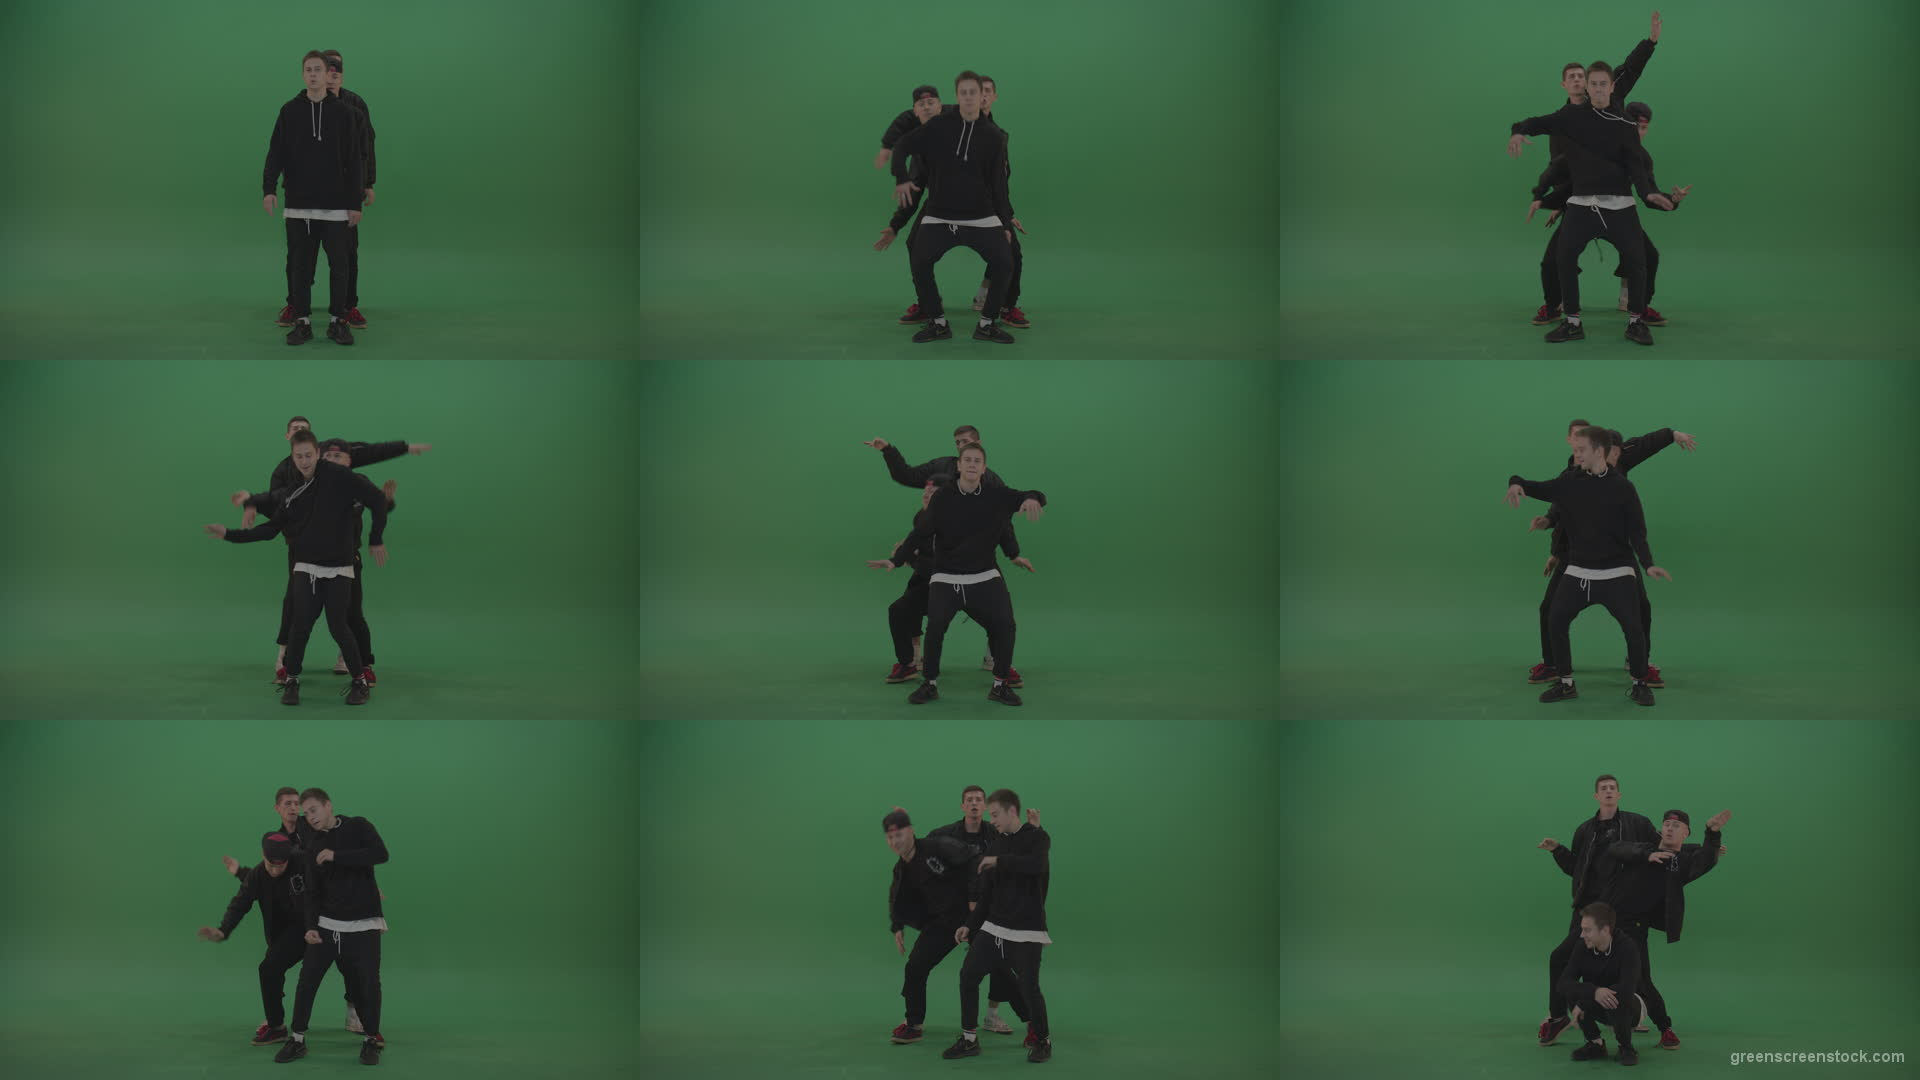 Wave-dance-by-boys-breakdance-team-on-green-screen-background Green Screen Stock